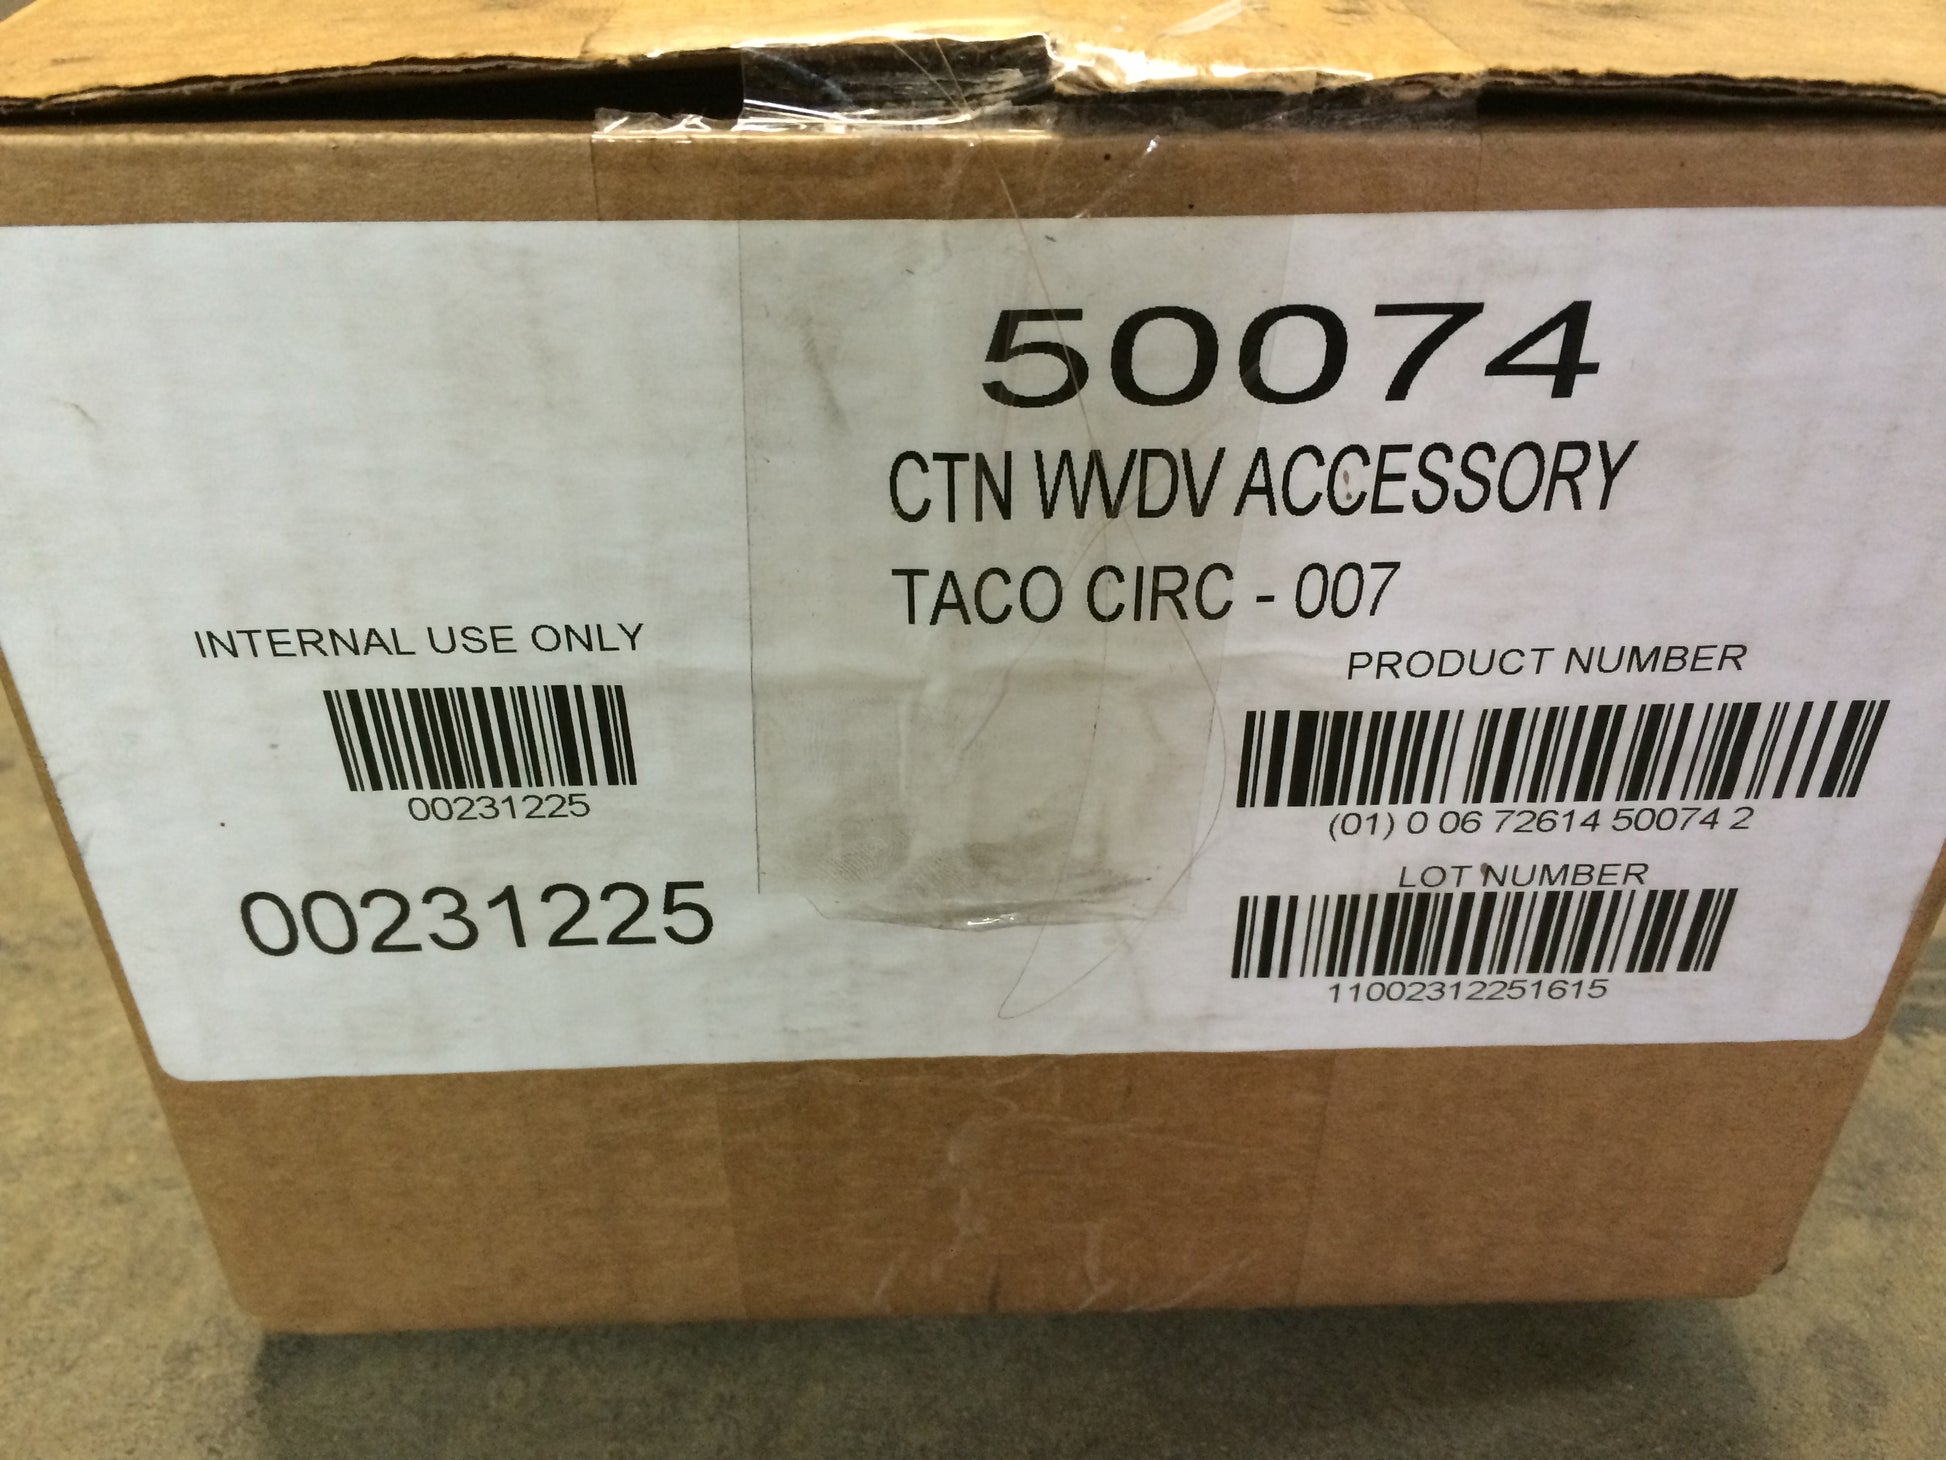 CTN WVDV ACCESSORY KIT INCLUDES TACO 007-HF5 PUMP, 115/60